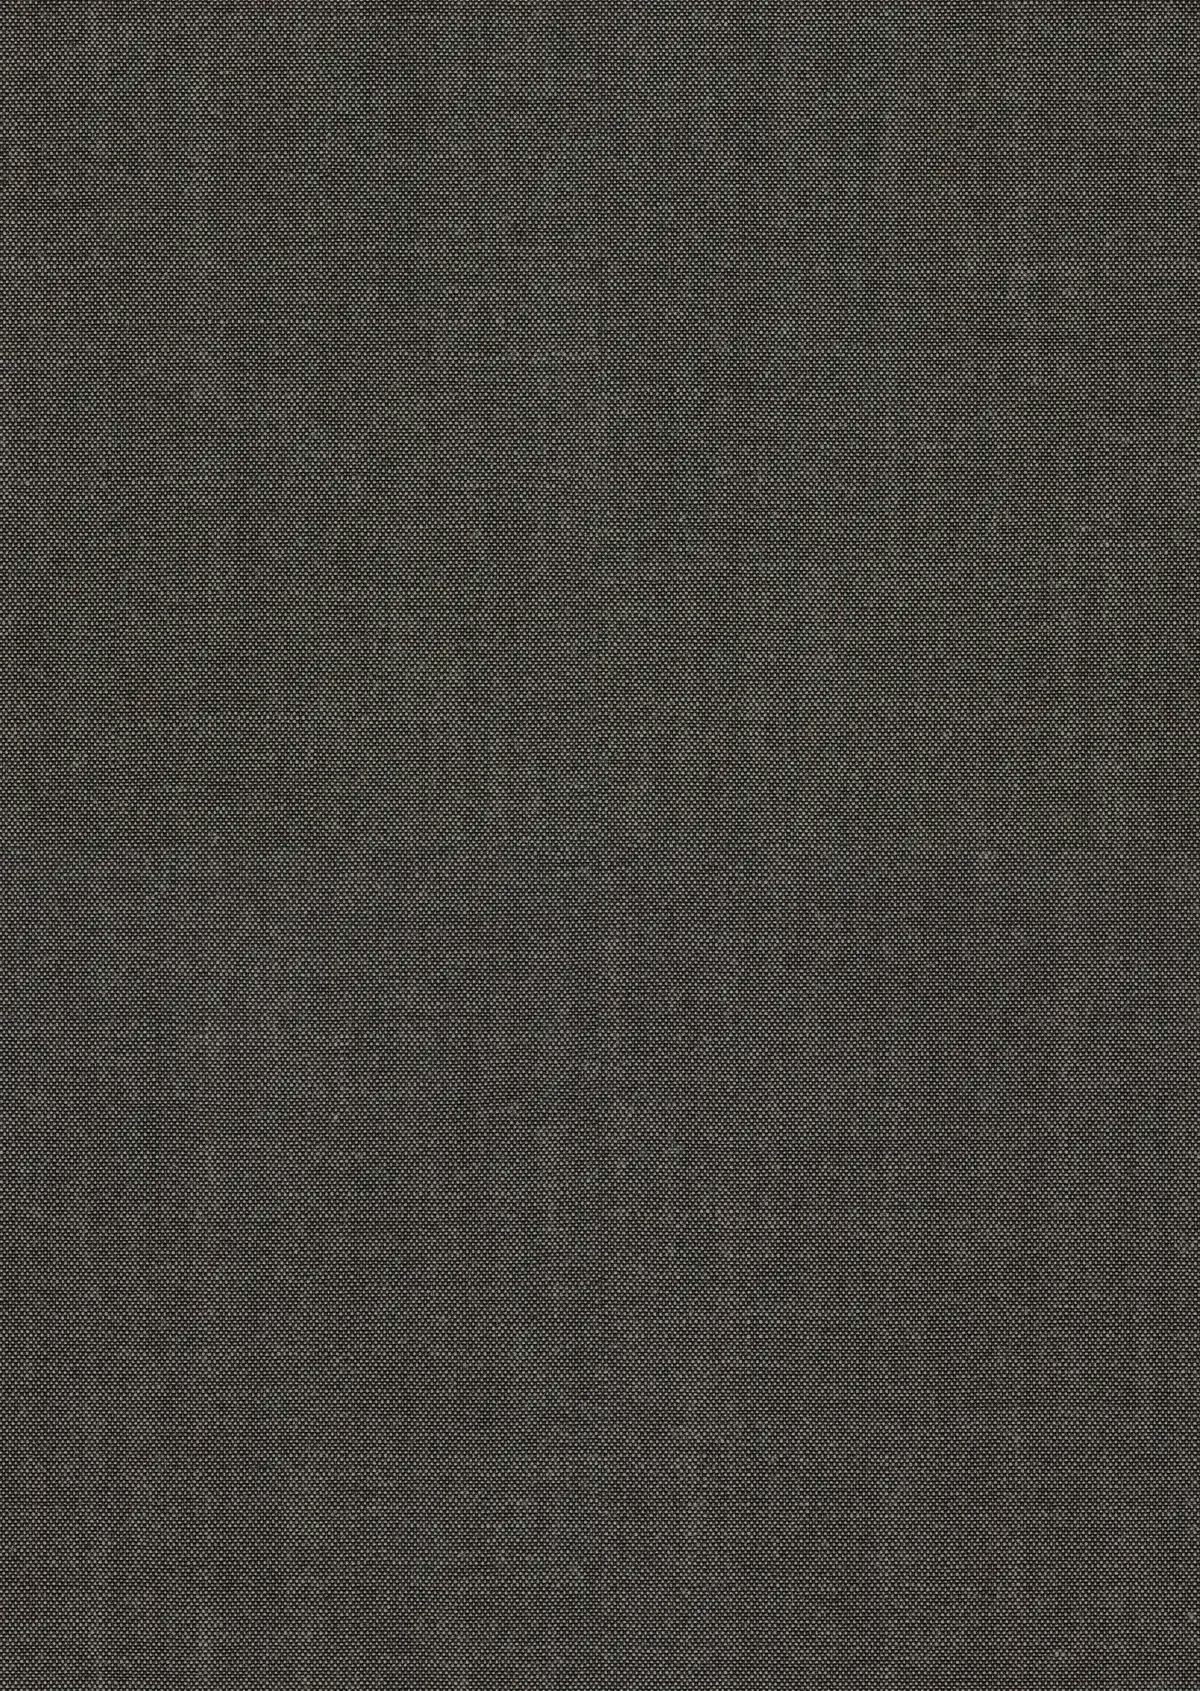 Fabric sample Remix 3 152 grey